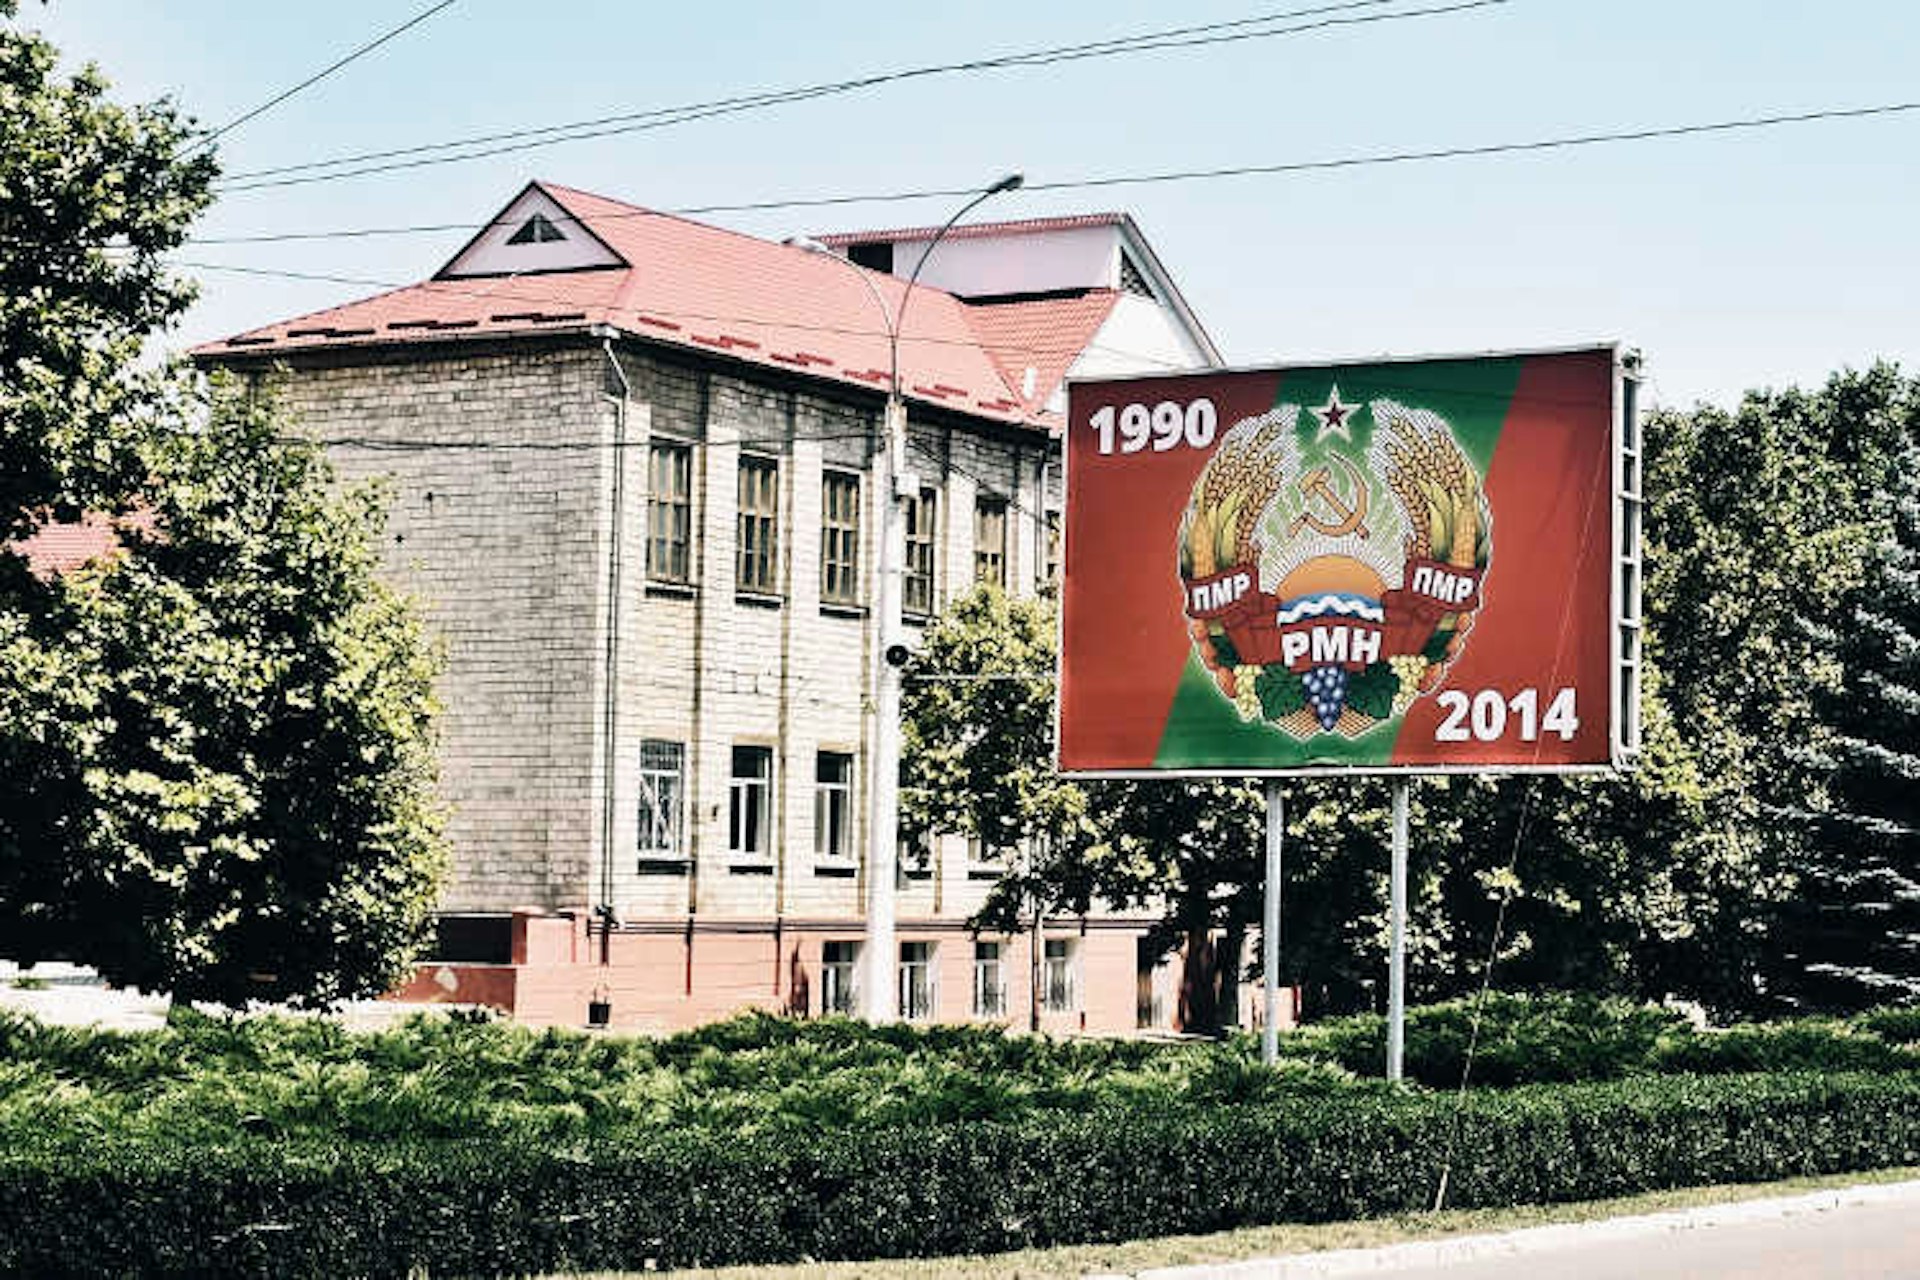 ‘Hammer and sickle’ billboard, Tiraspol. Image by Mark Baker / Lonely Planet